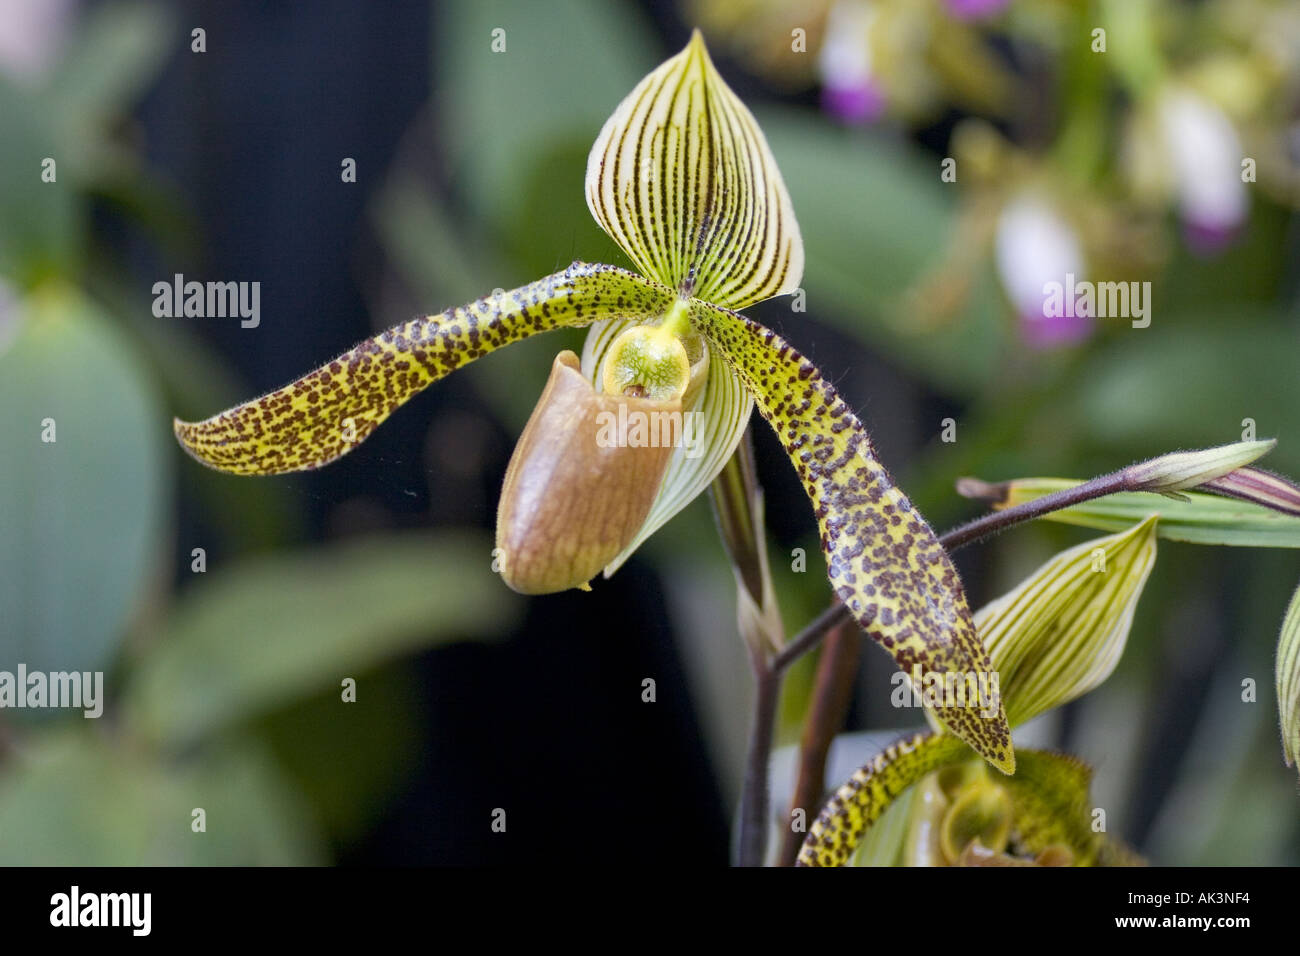 Orchid paph Paphiopedilum Shukakulix radshildiaum Stock Photo